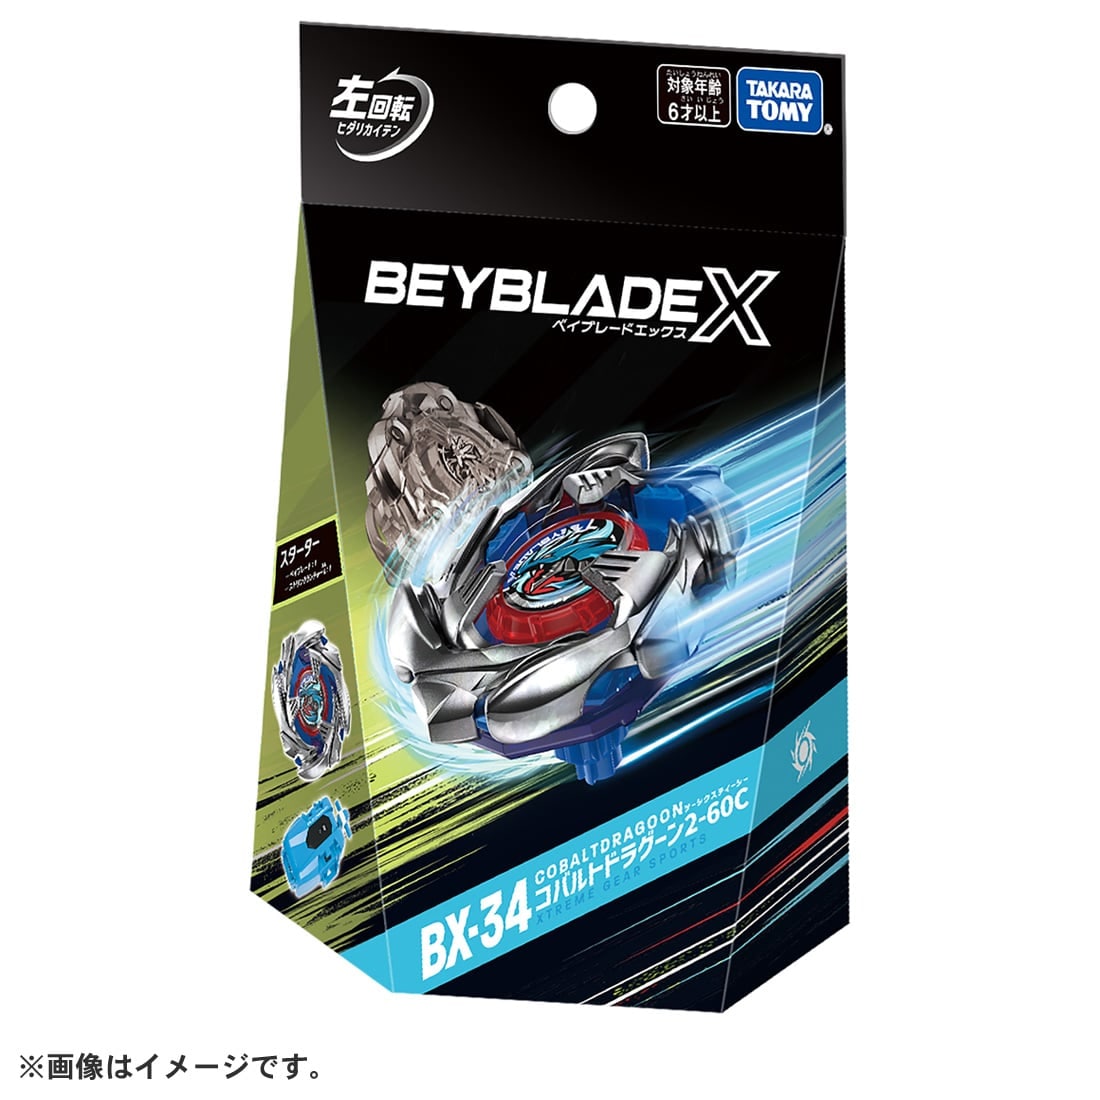 BEYBLADE X『BX-34 スターター コバルトドラグーン2-60C』ベイブレード-004